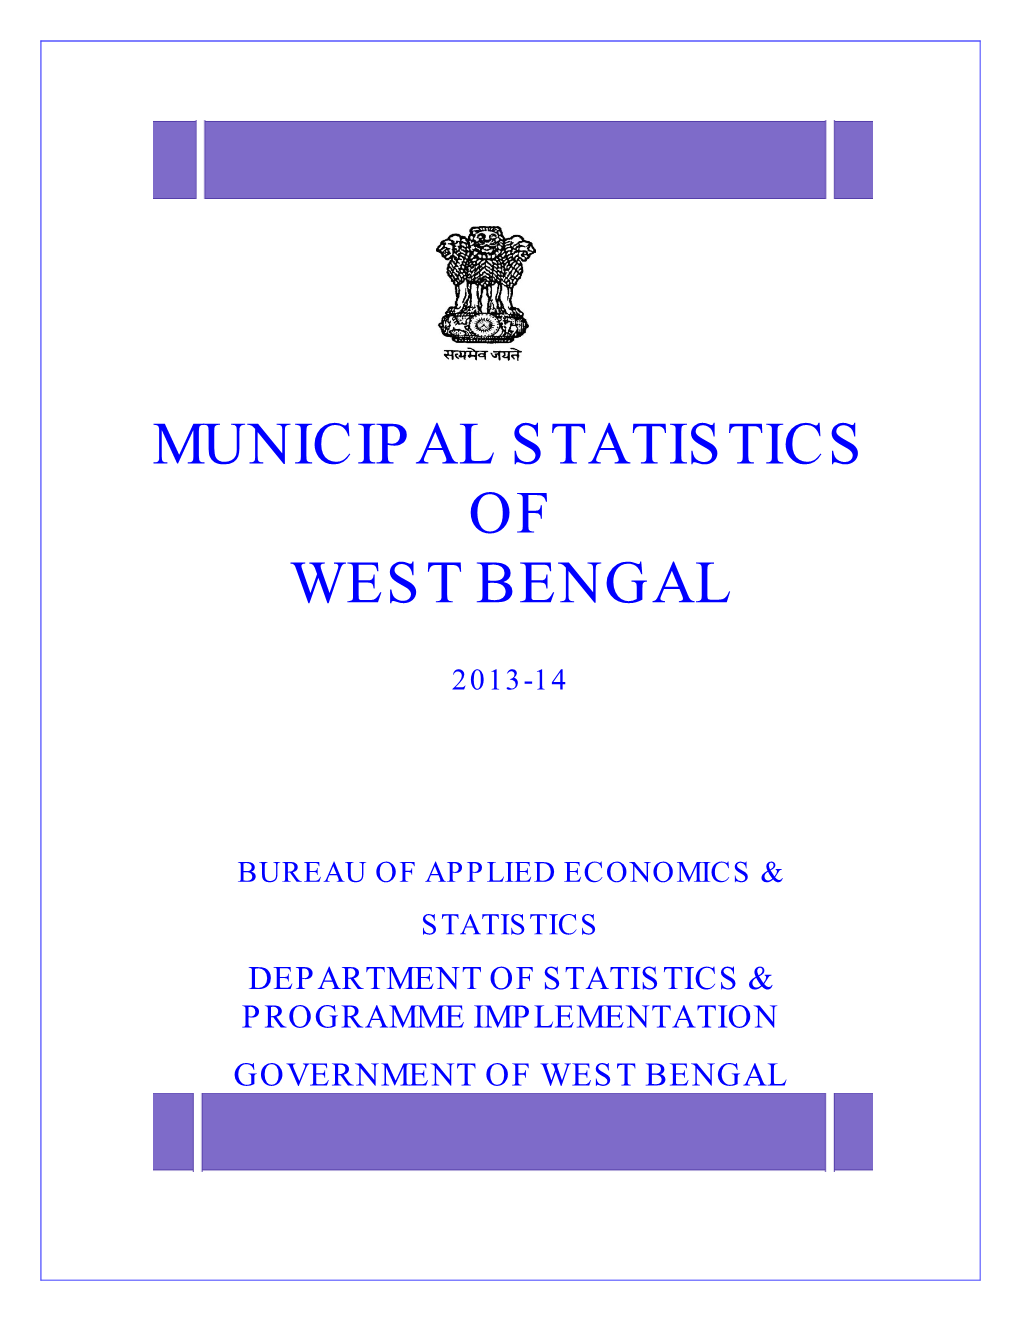 Municipal Statistics of West Bengal